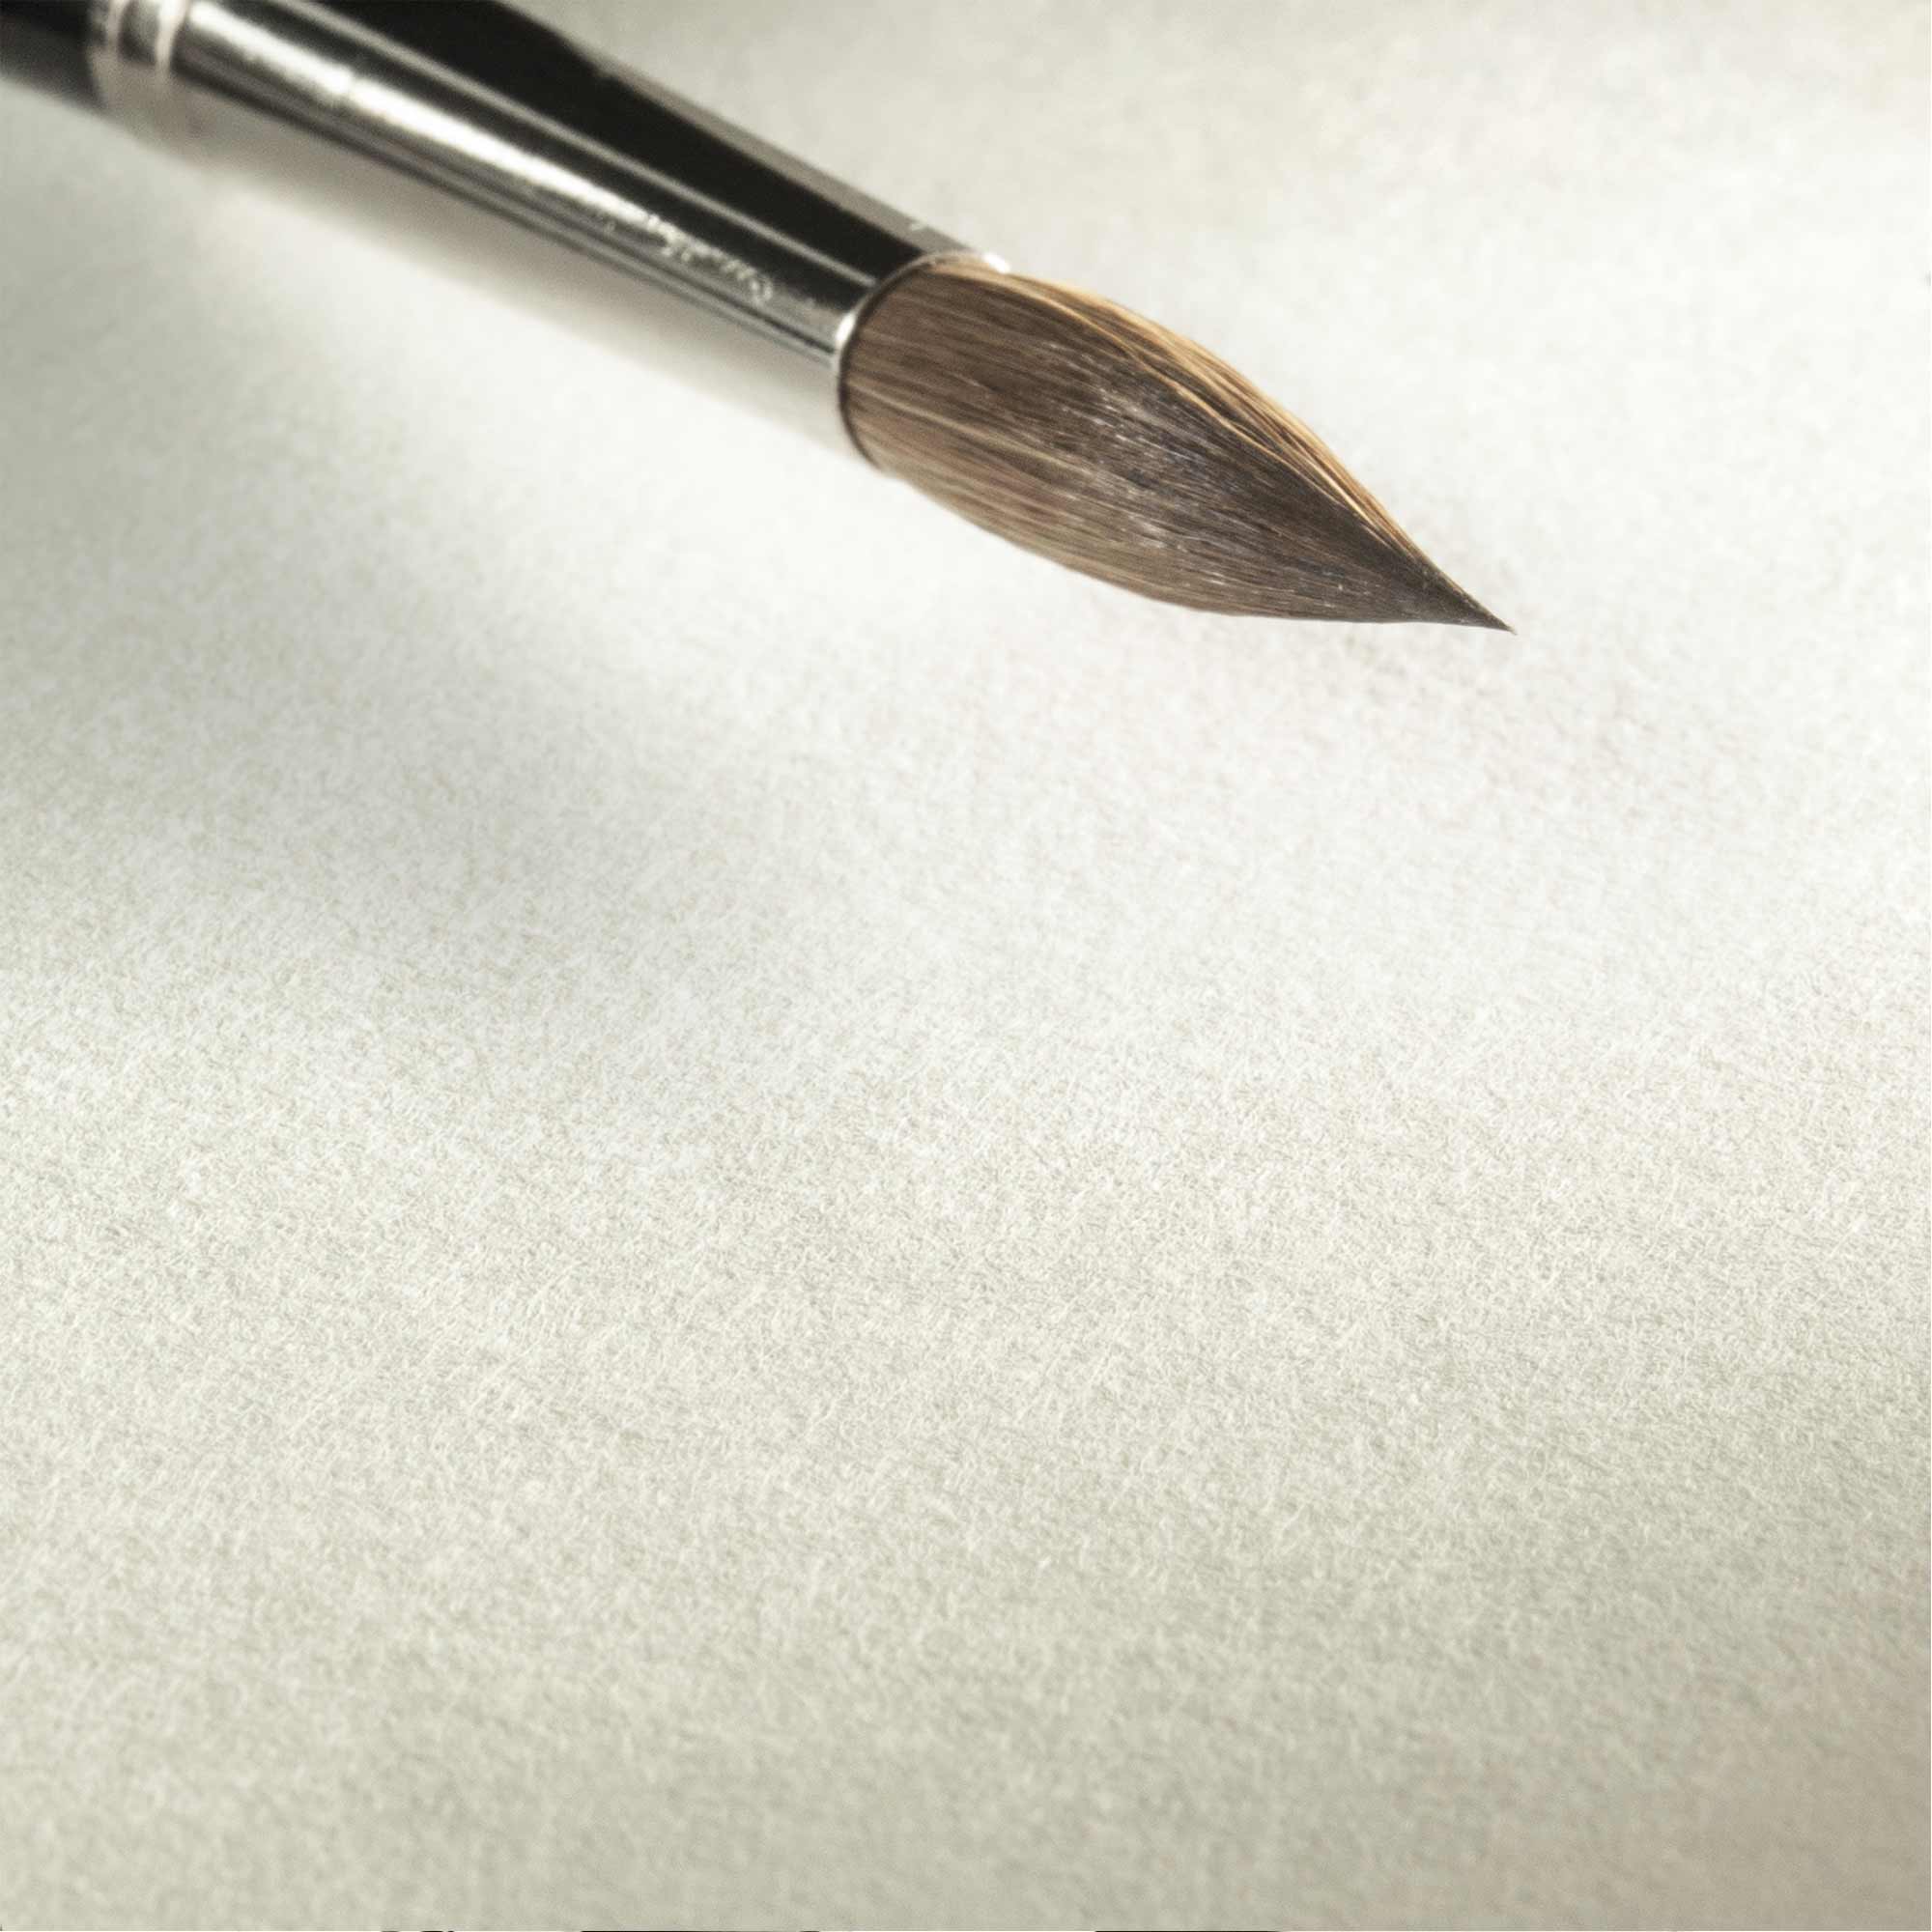 Hahnemühle Sumi-e Pad - Paper Closeup